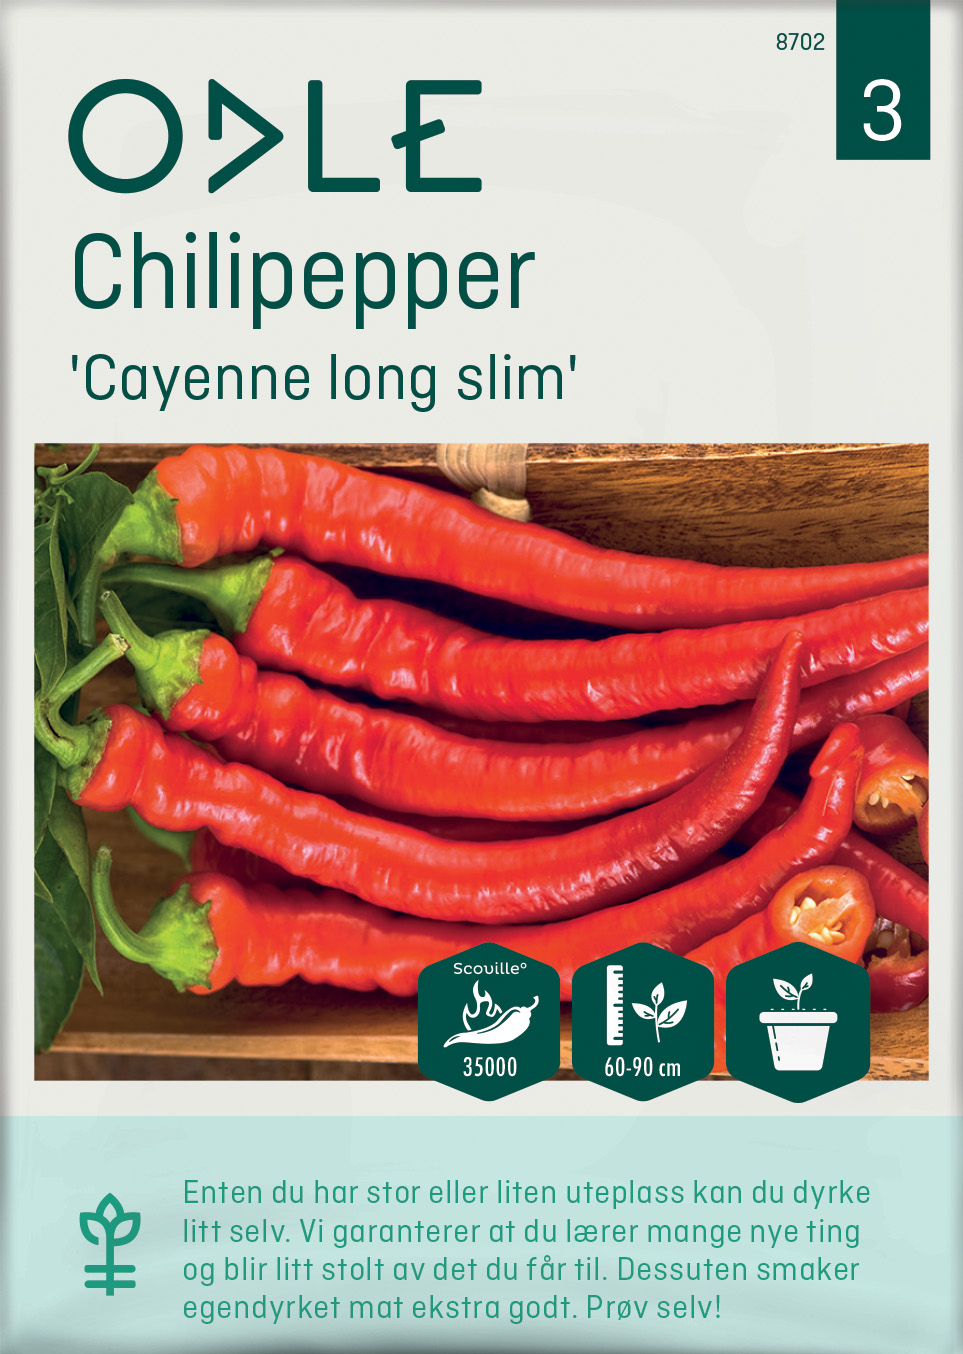 Odle 'Cayenne long slim' chilipepper frø